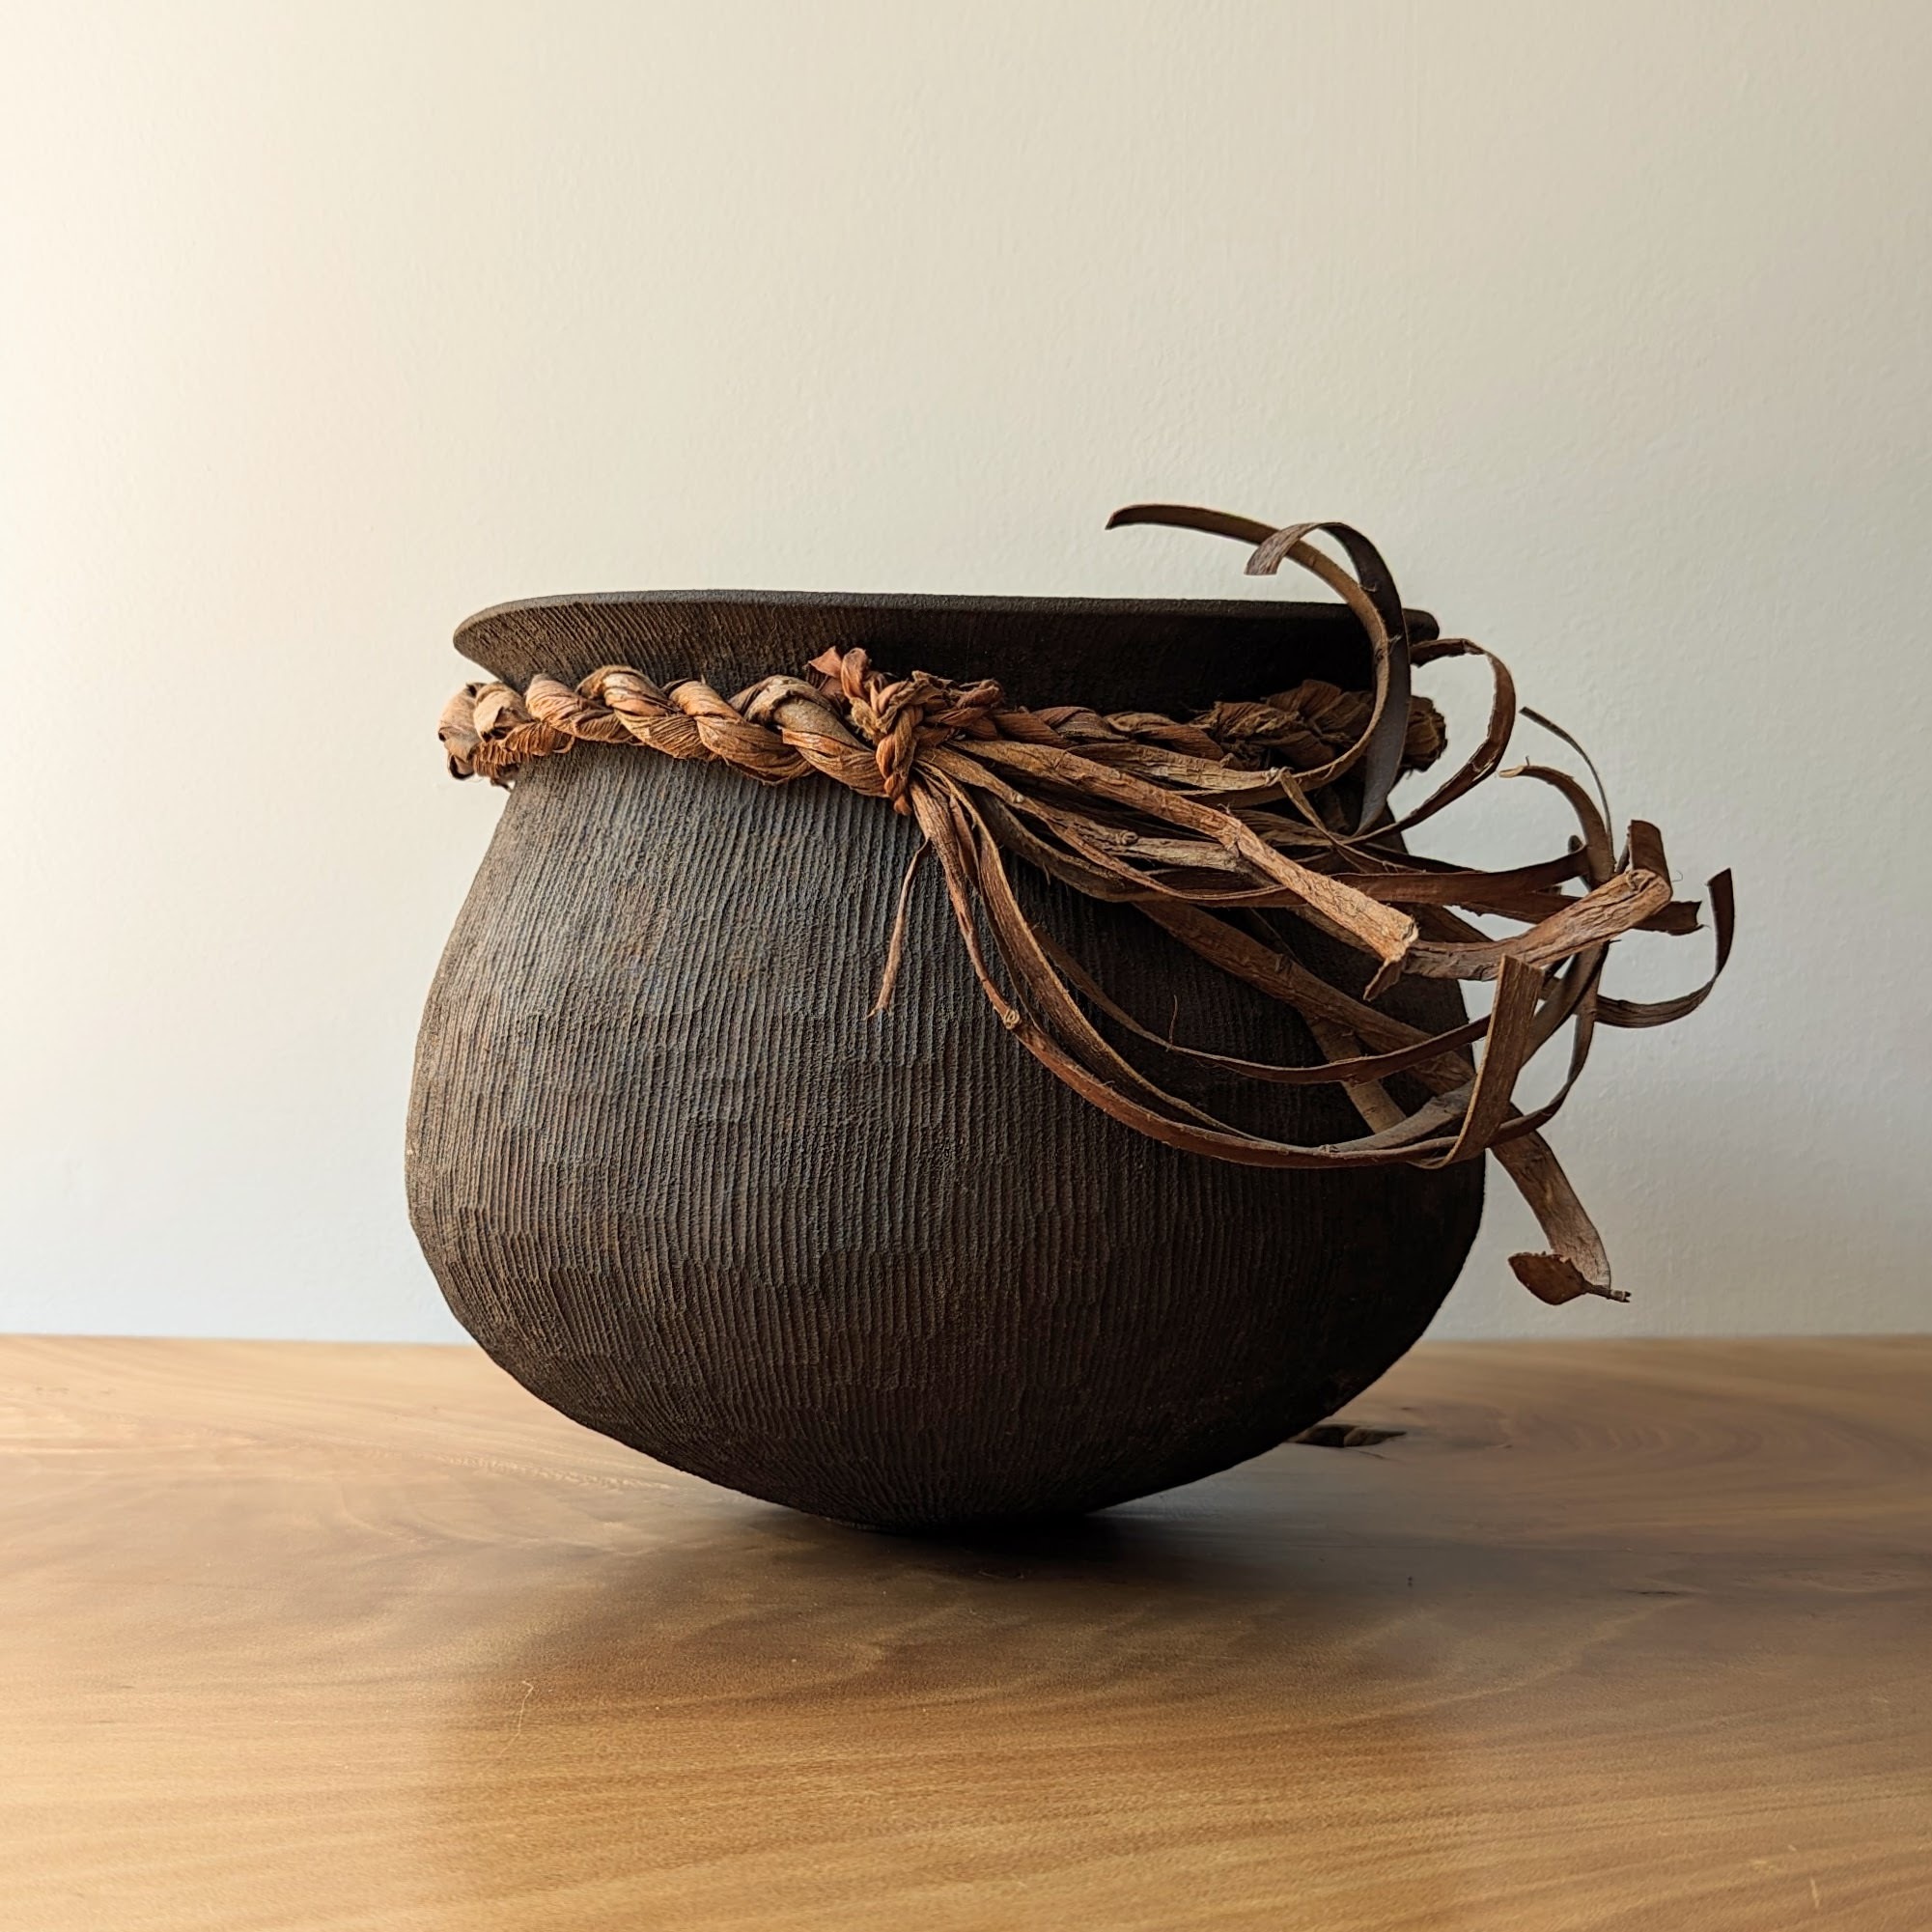 Large dark vessel with string braided around the rim